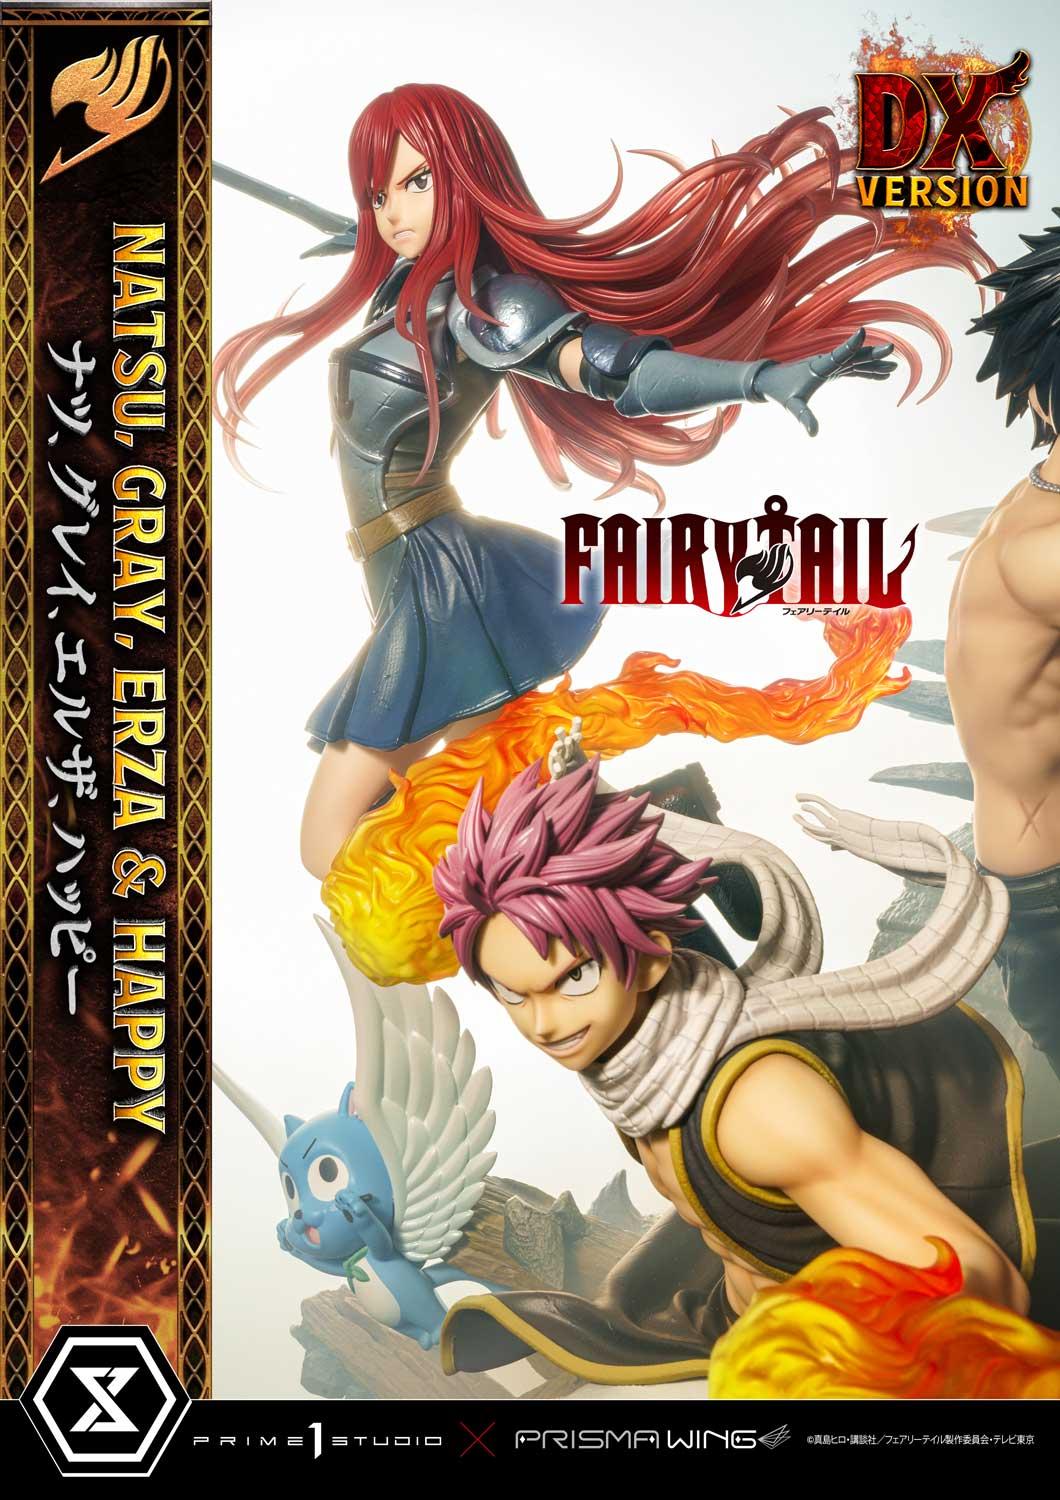 Dragon Force  Fairy tail anime, Natsu fairy tail, Fairy tail ships